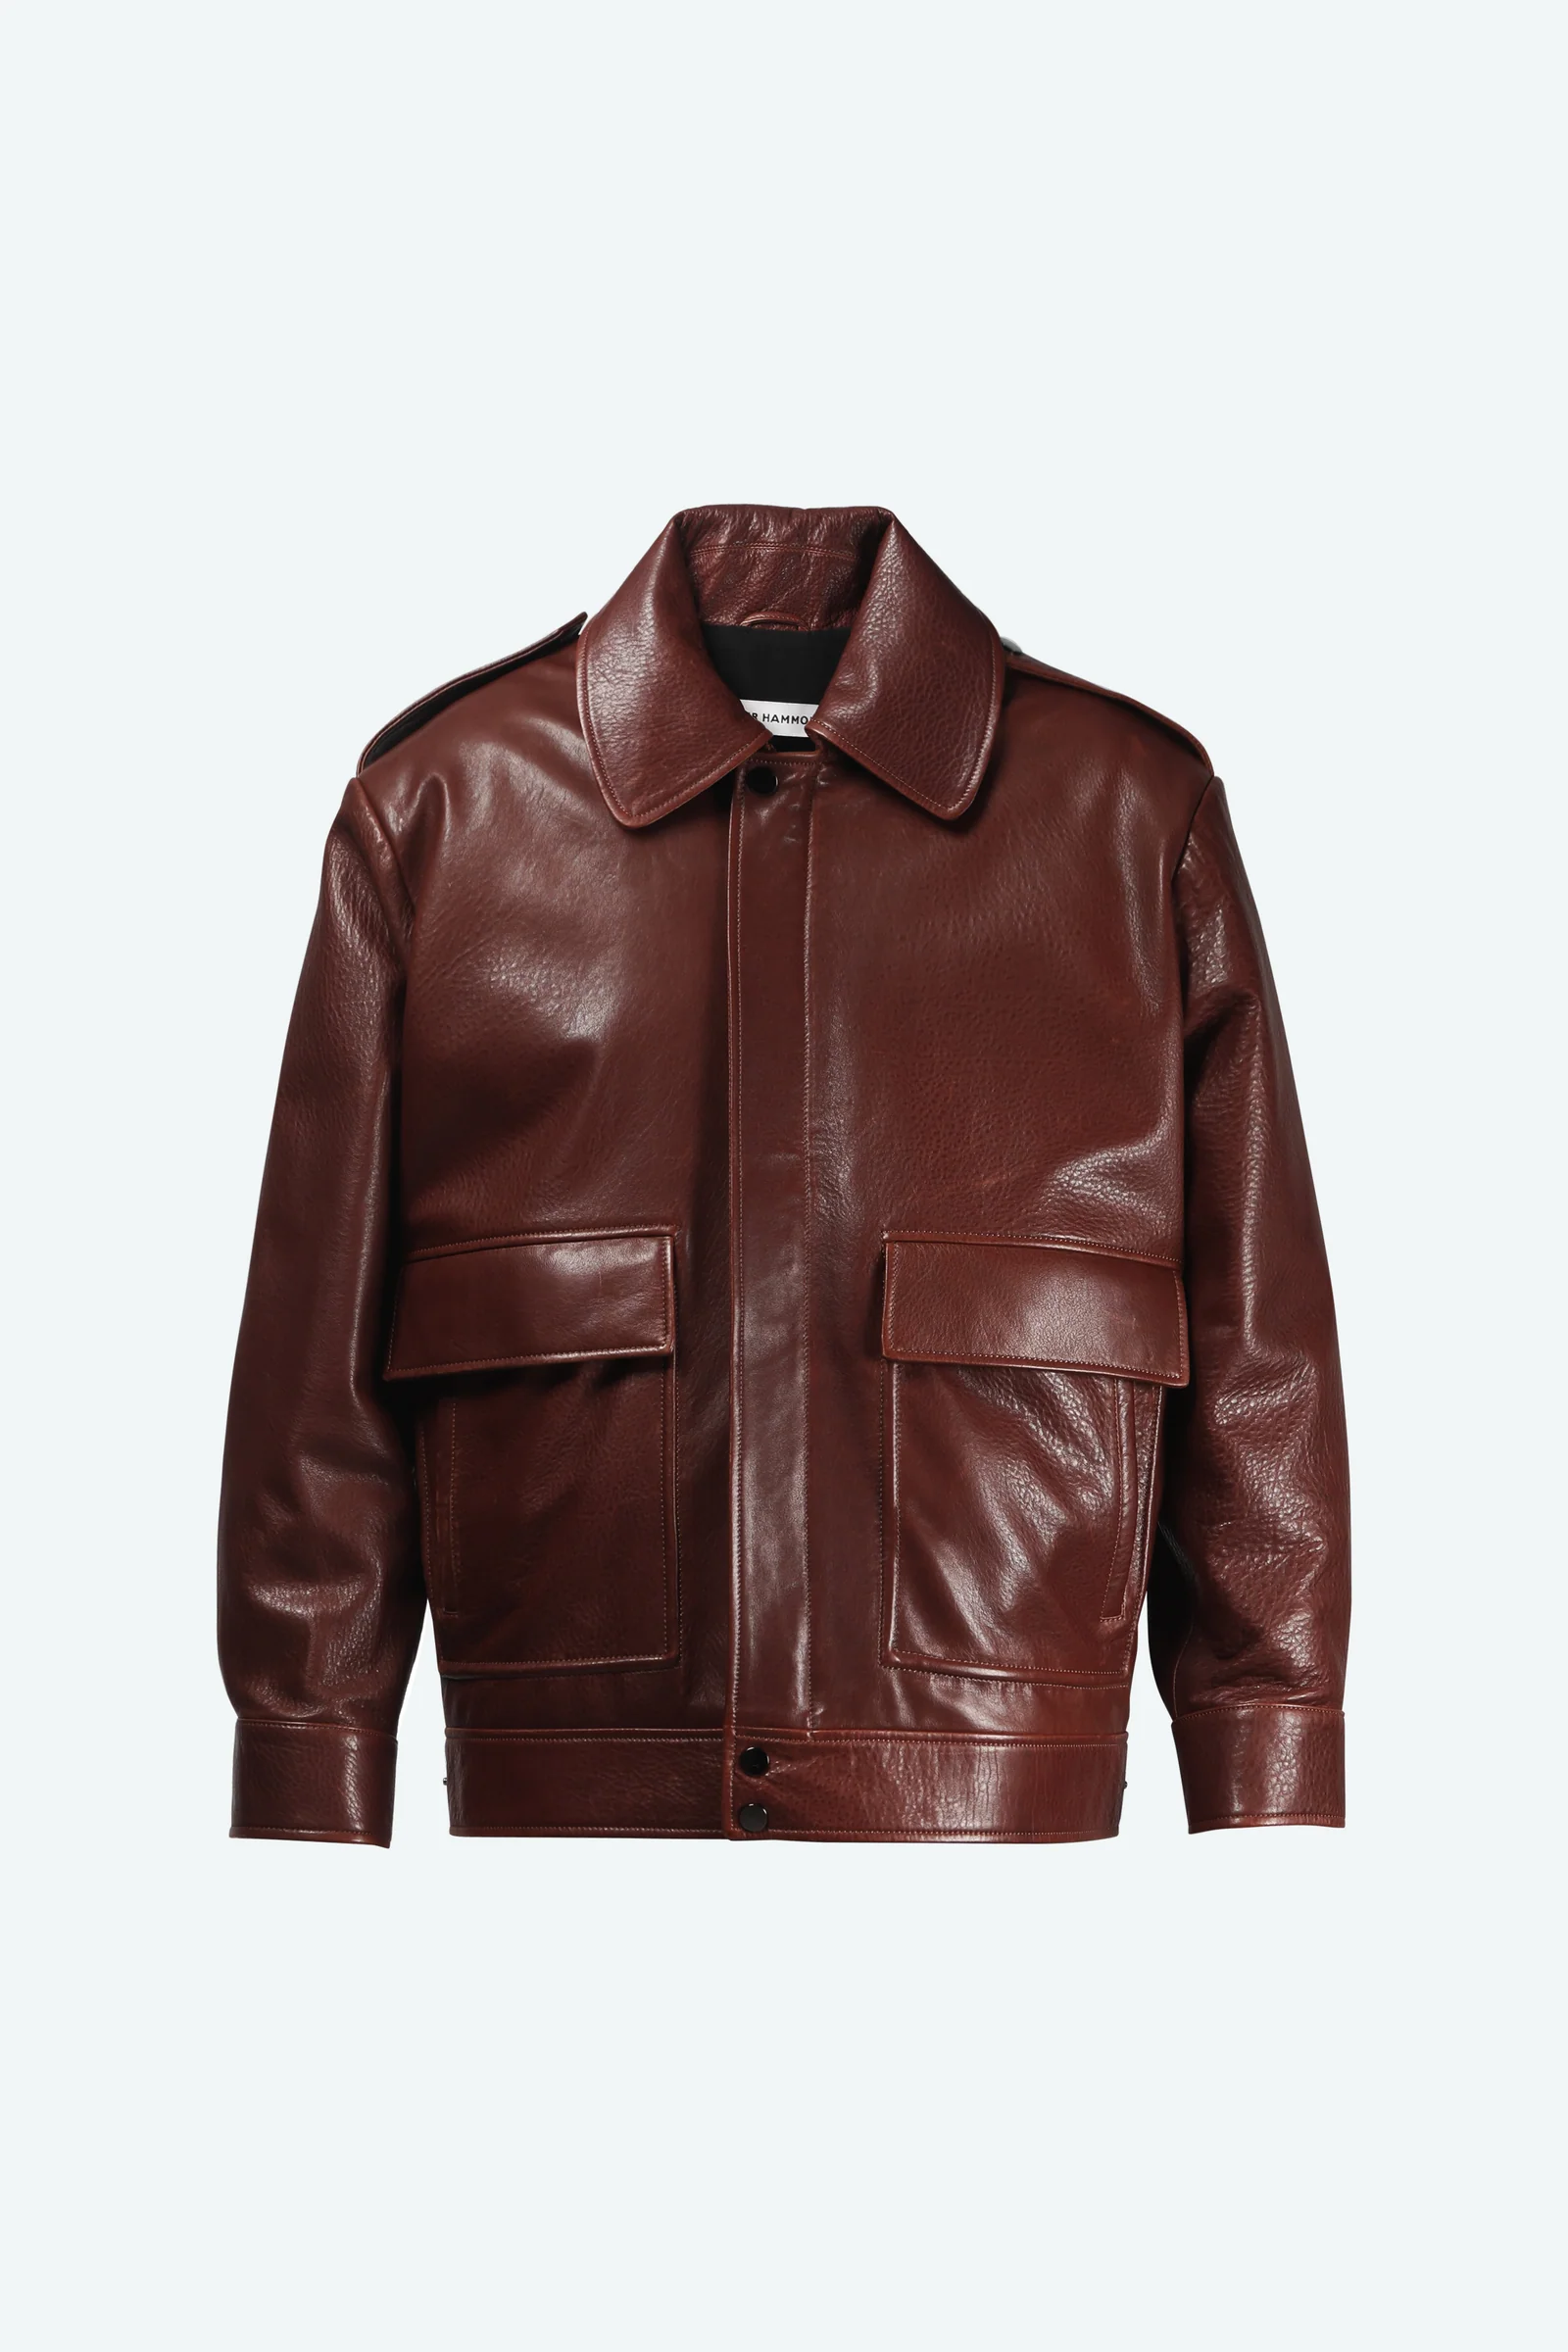 Nour Hammour leather jacket